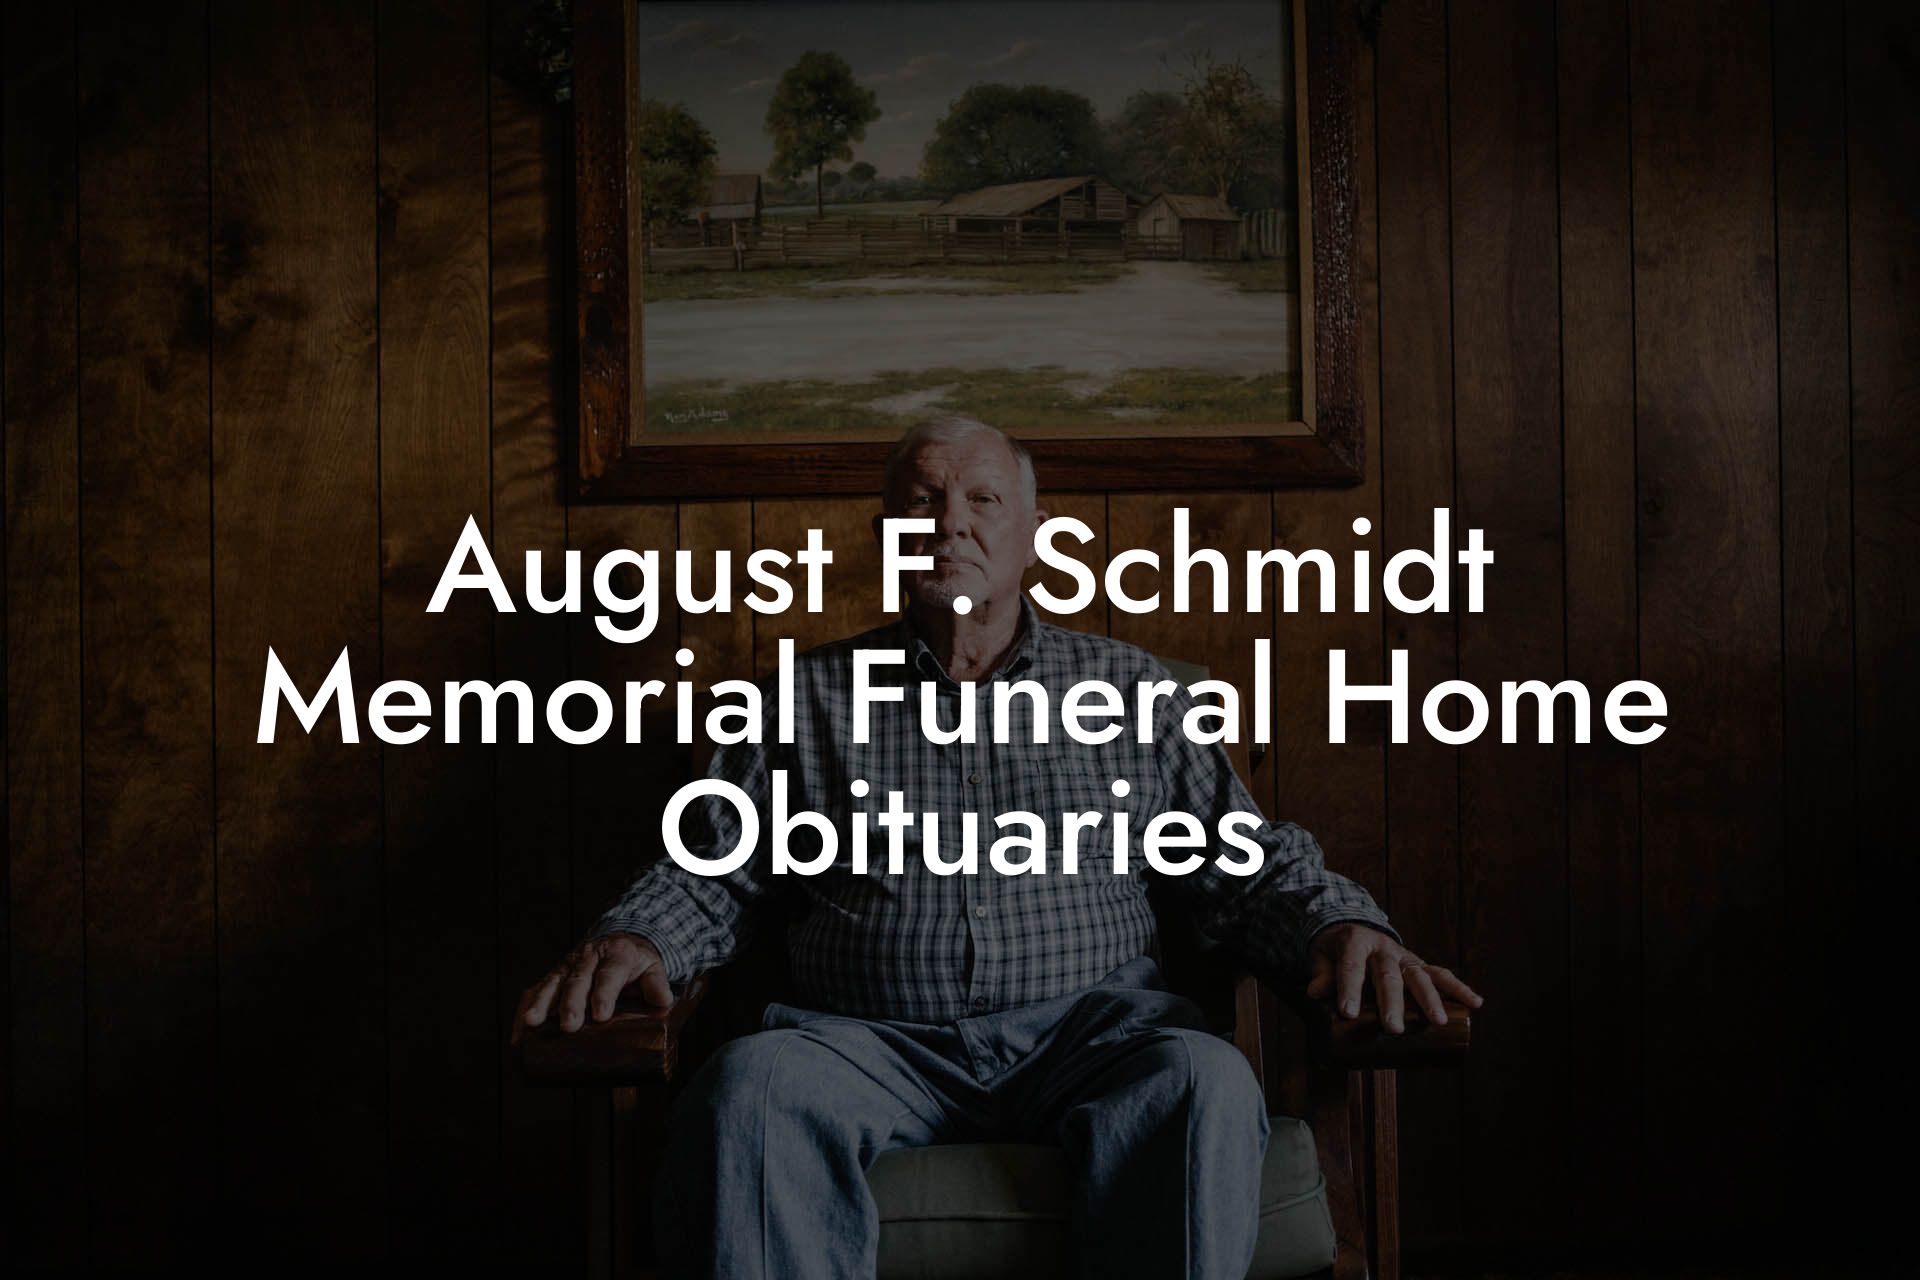 August F. Schmidt Memorial Funeral Home Obituaries